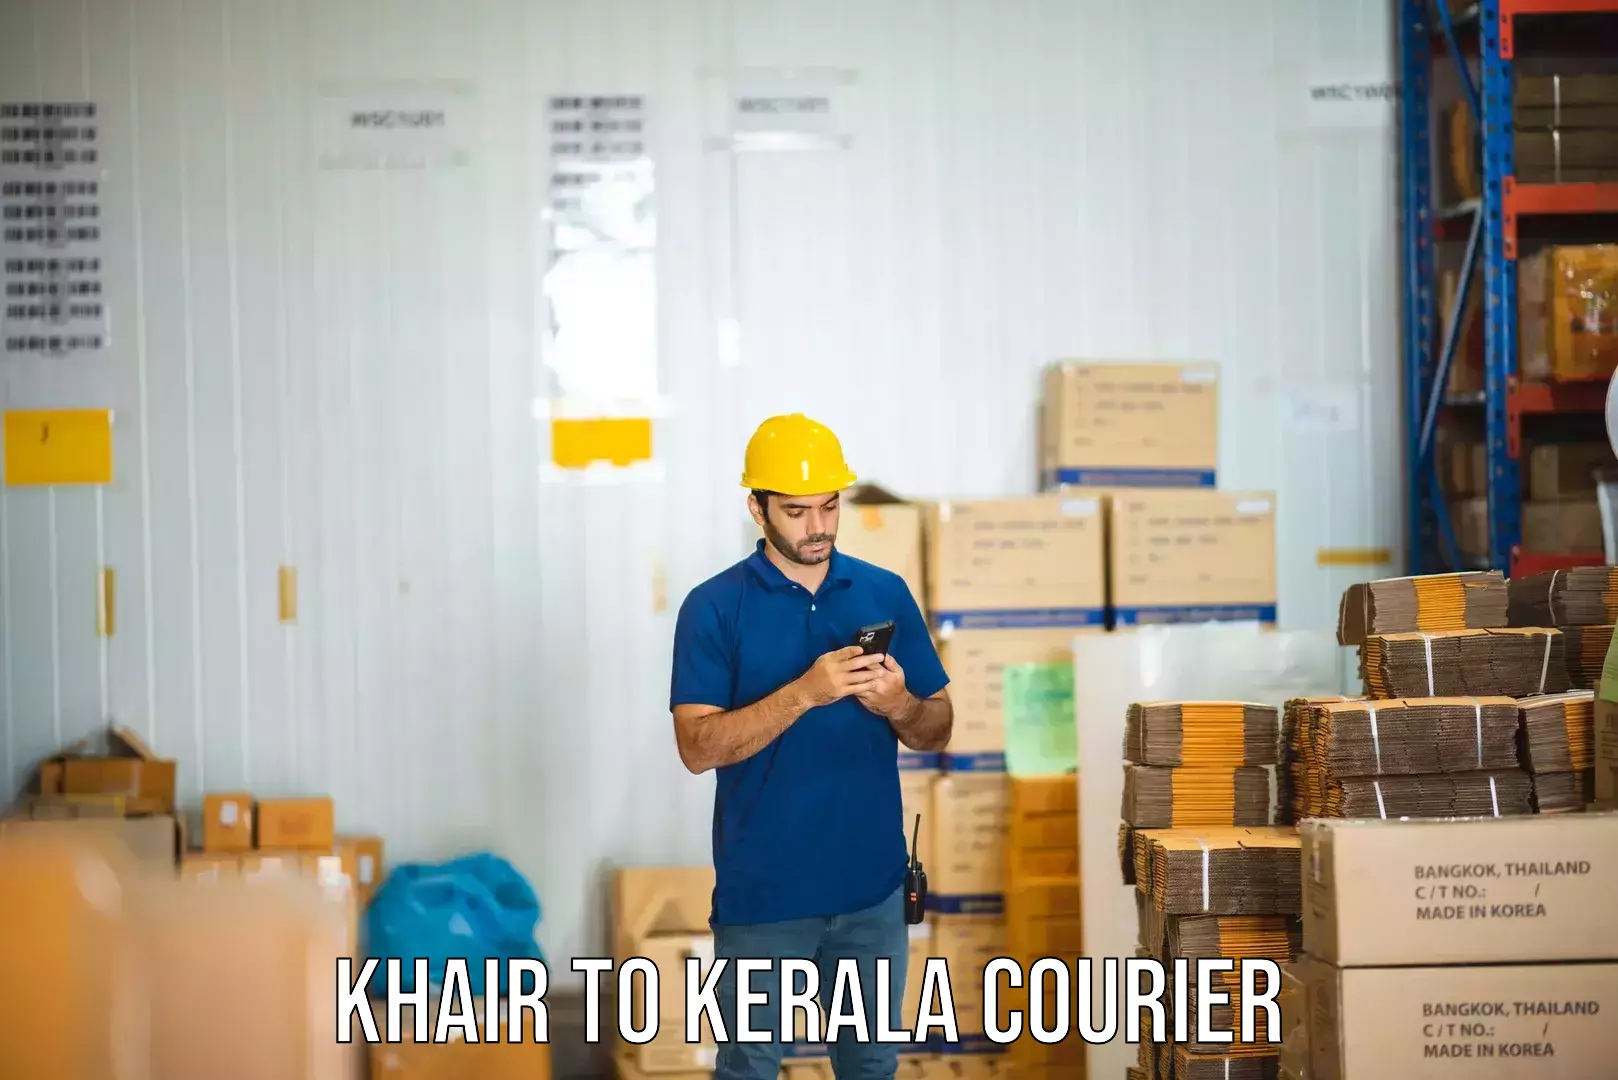 Global logistics network Khair to Kerala